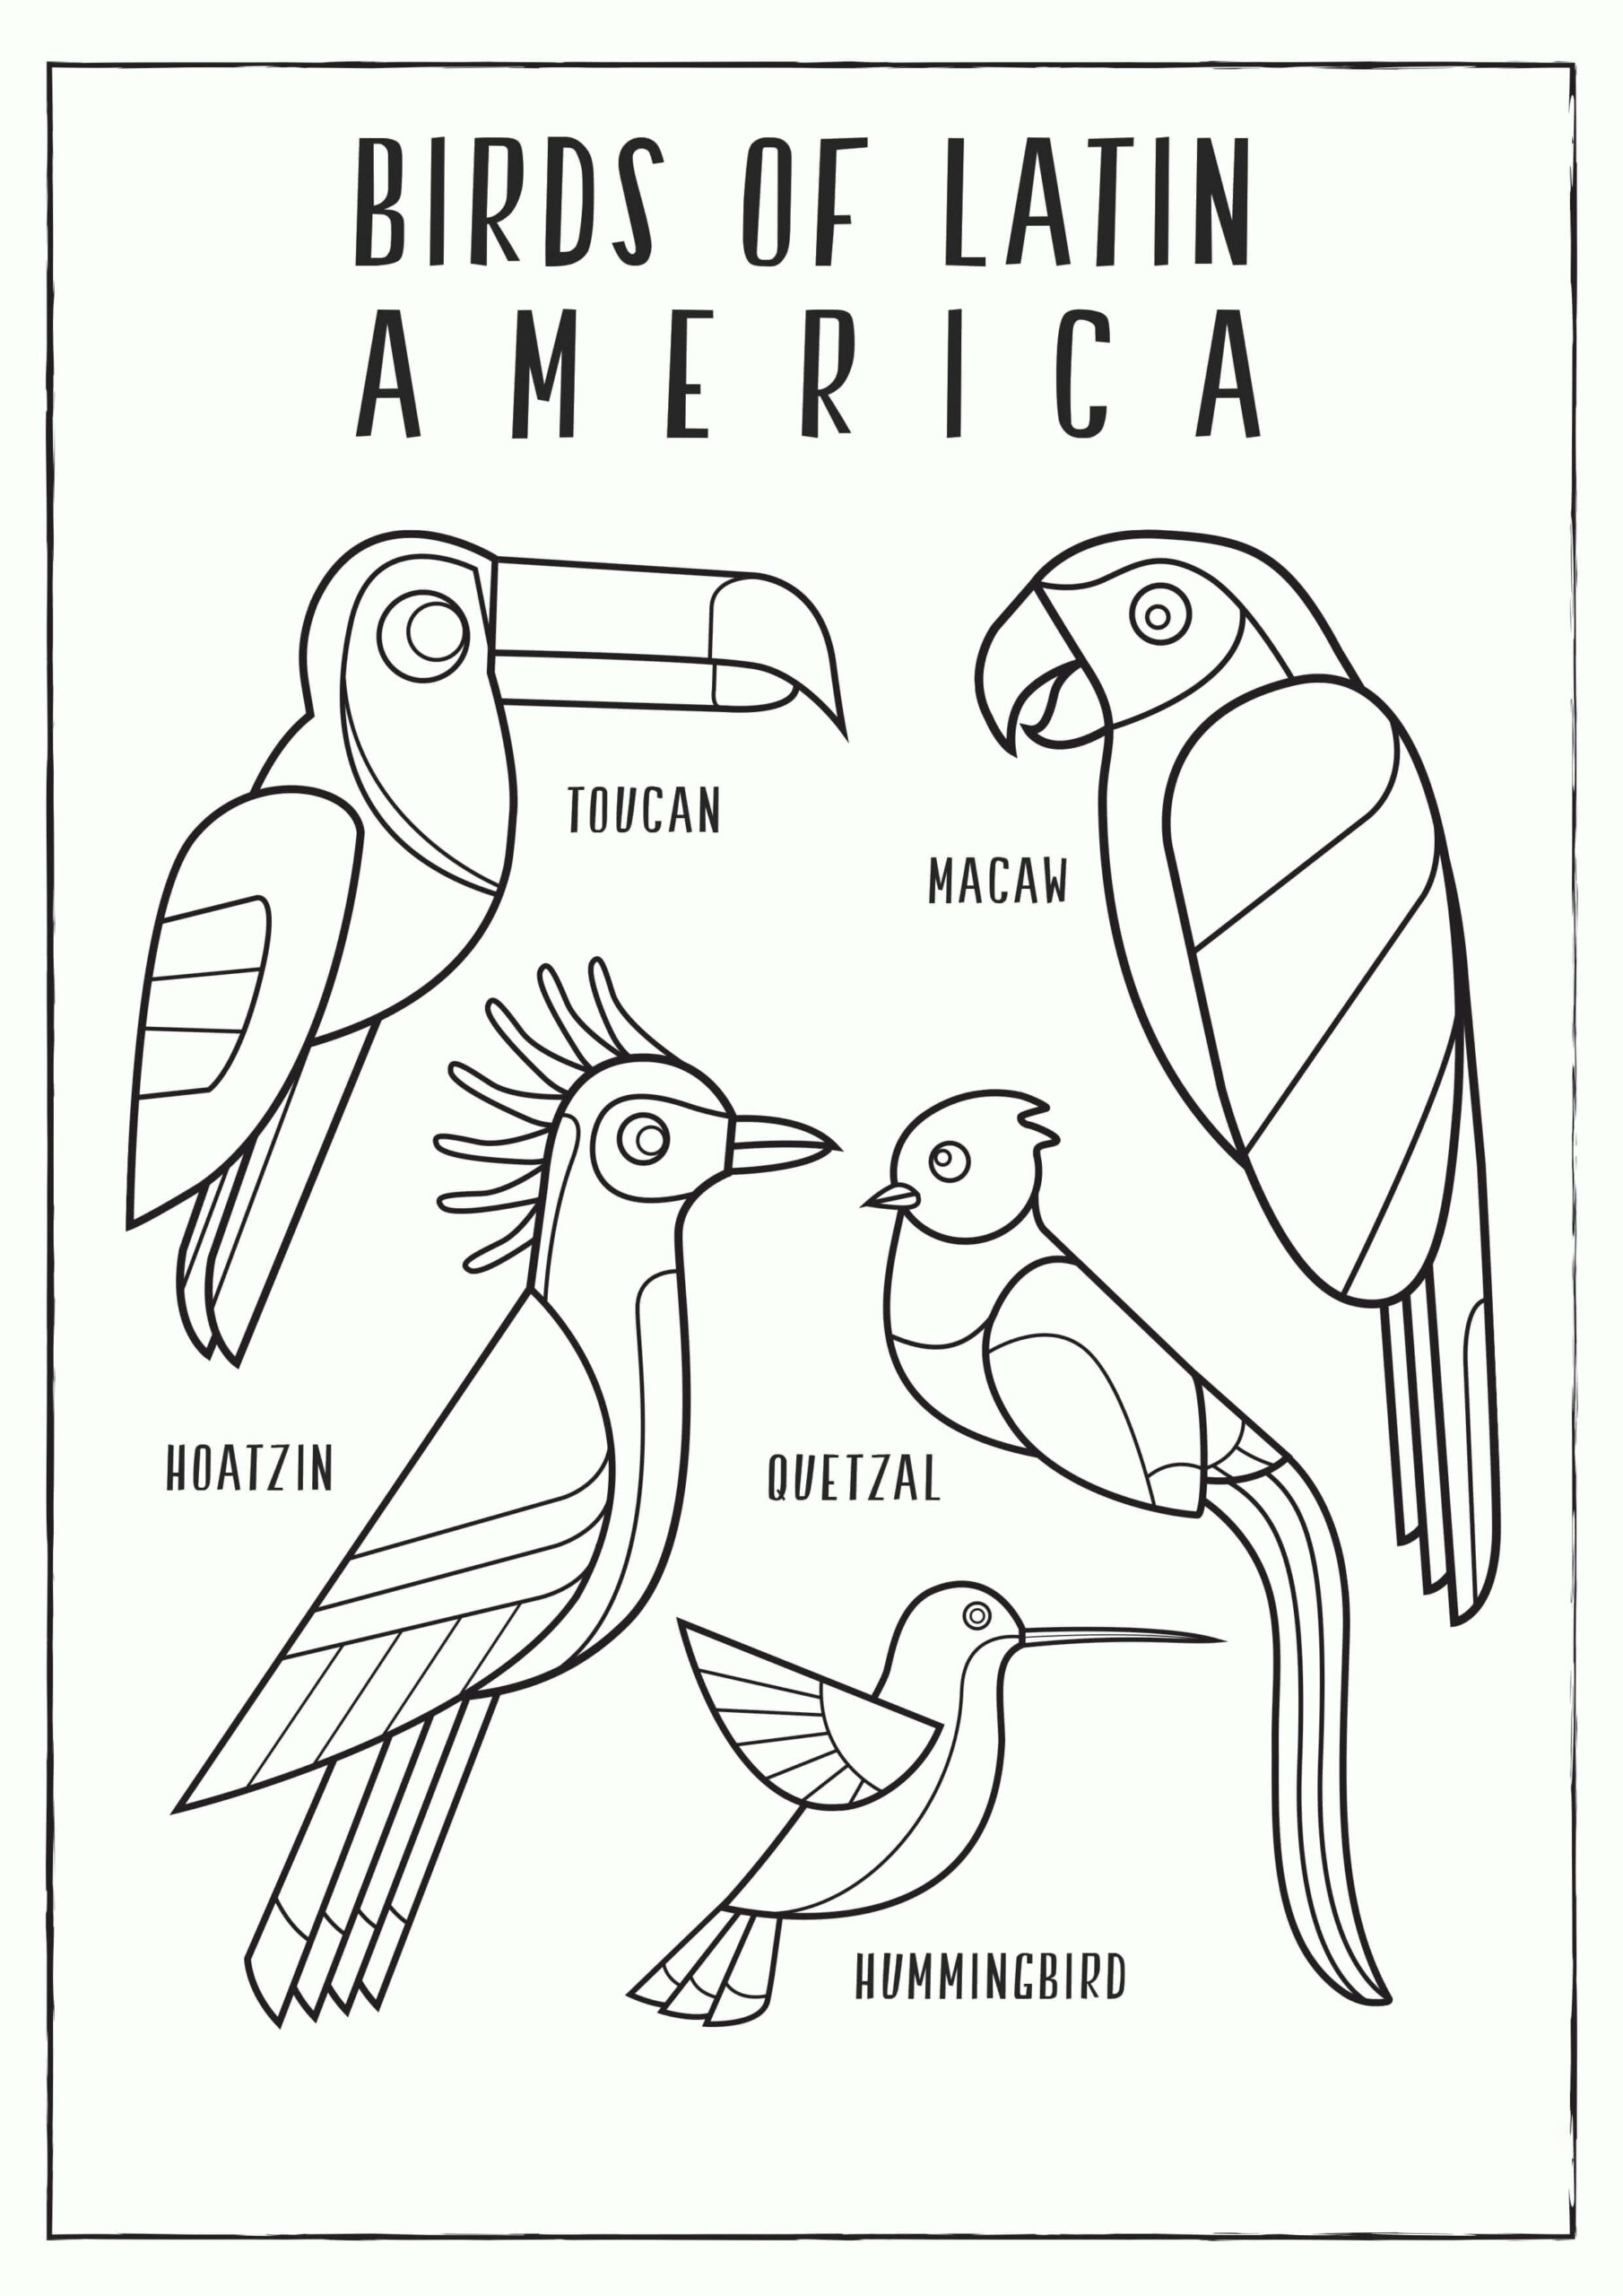 Aves de Latinoamerica